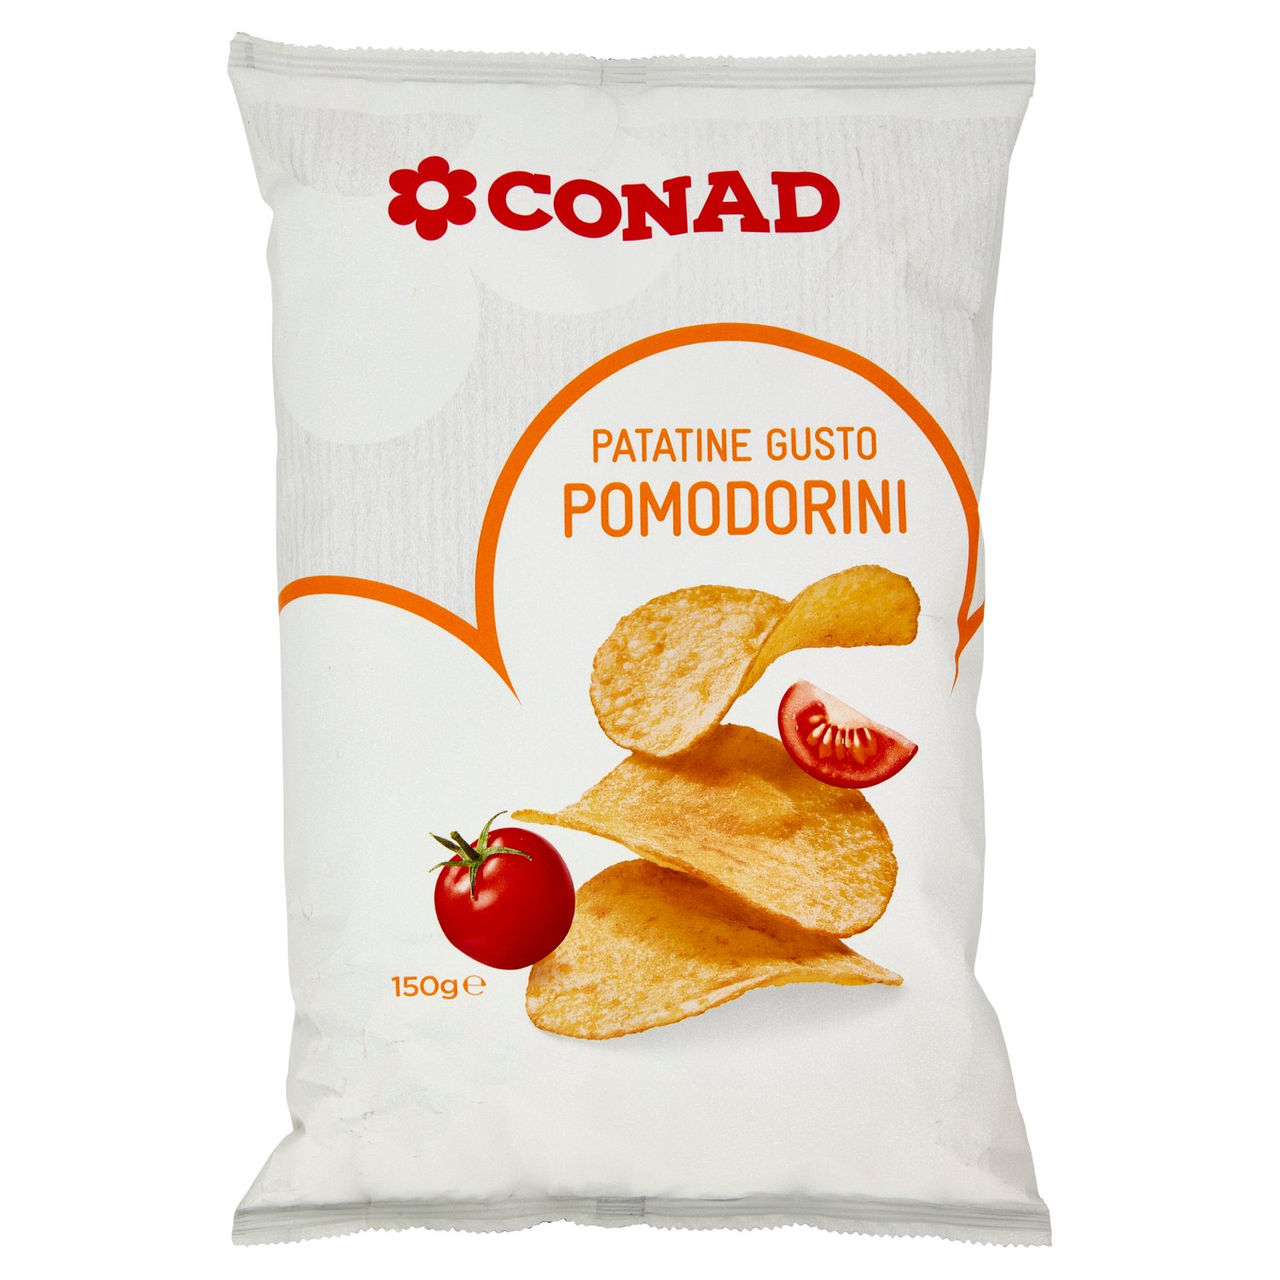 Patatine Gusto Pomodorini Conad in vendita online